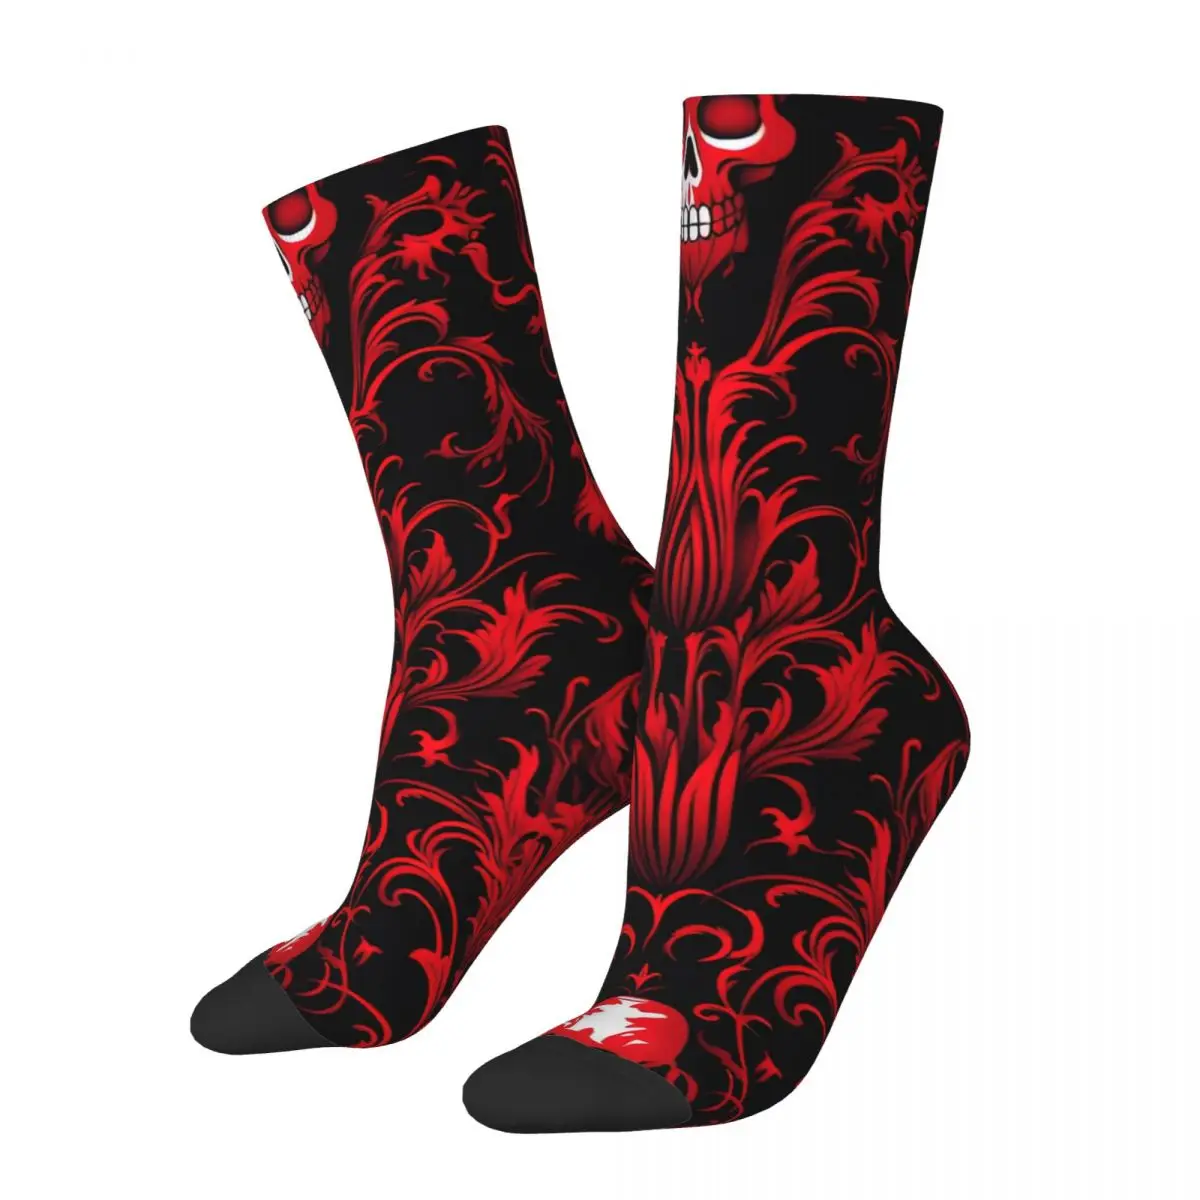 

Red And Black Wallpaper With Skulls Funny Socks for Women Men Novelty Street Style Crazy Spring Summer Socks Gifts